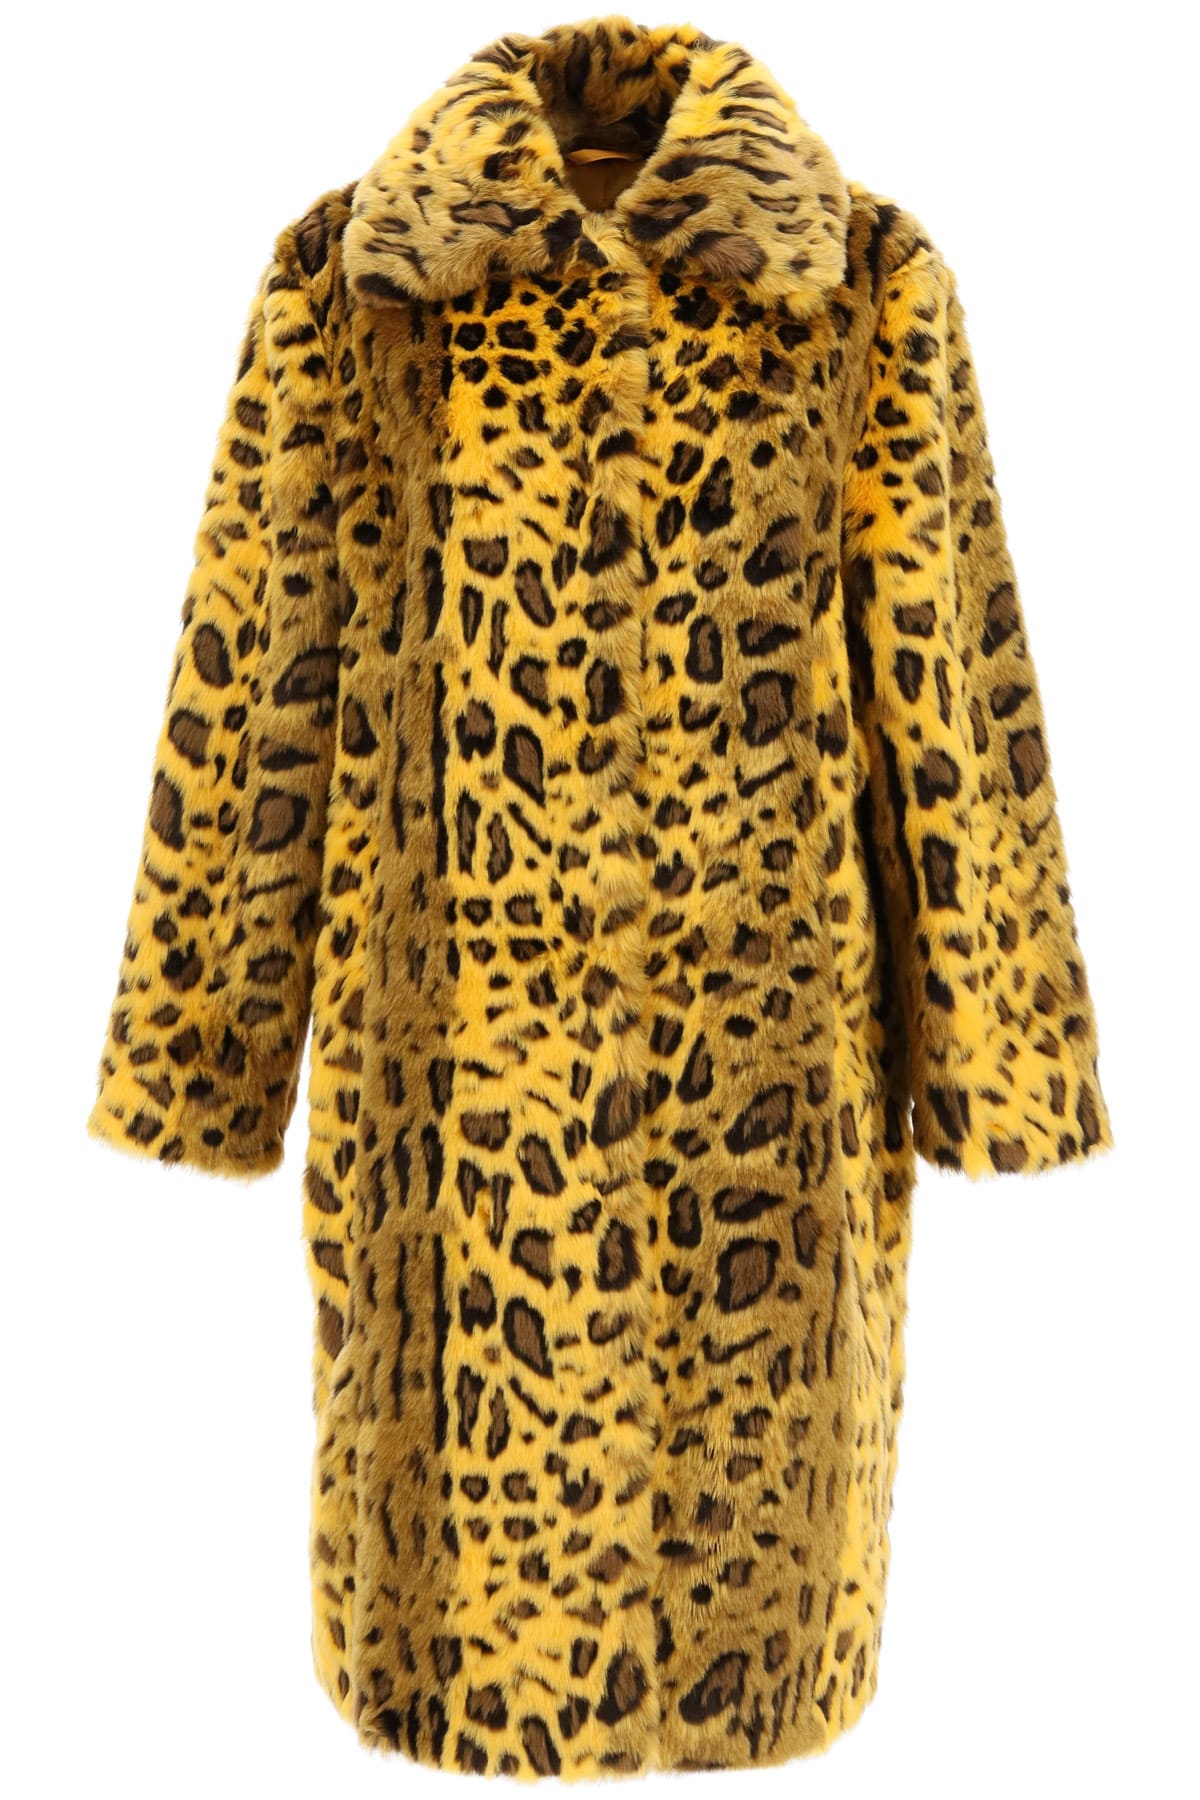 STAND STUDIO Maxine Leopard Eco-fur Coat